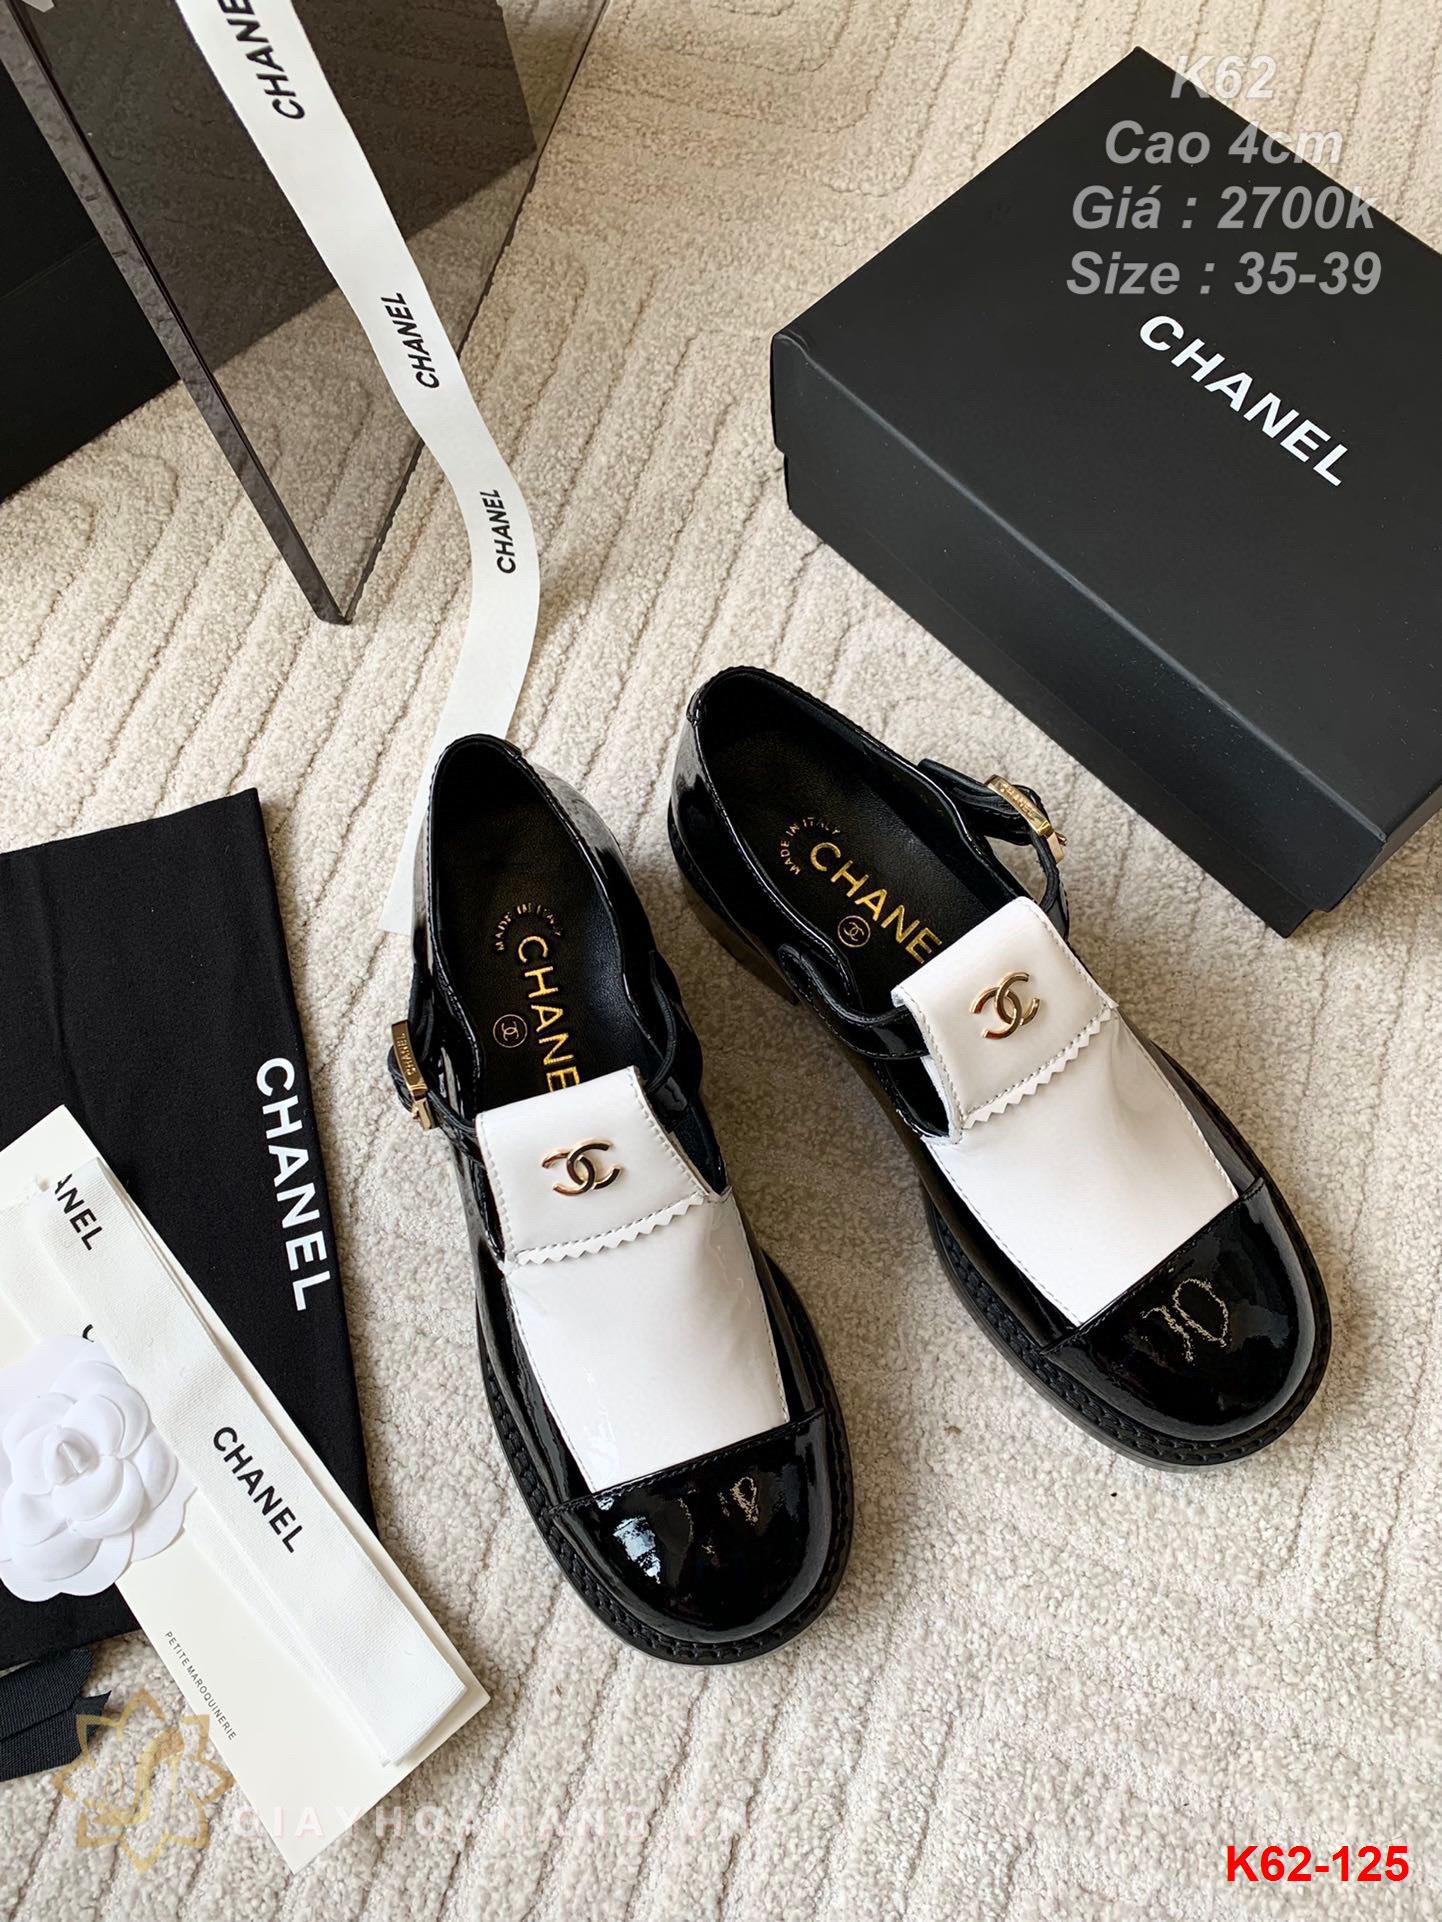 K62-125 Chanel giày cao gót 4cm siêu cấp